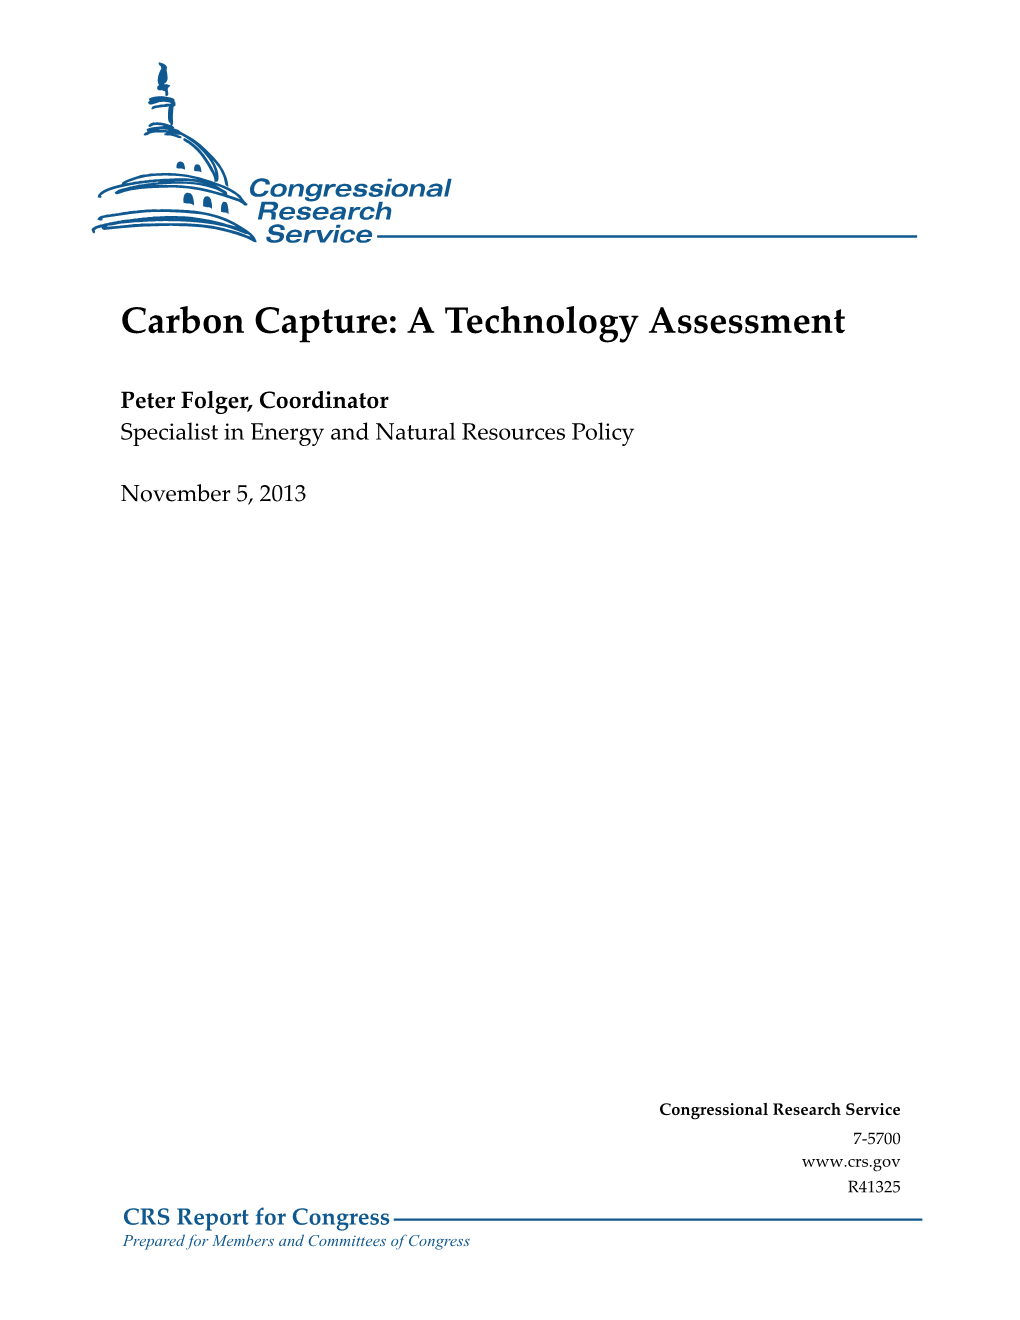 Carbon Capture: a Technology Assessment